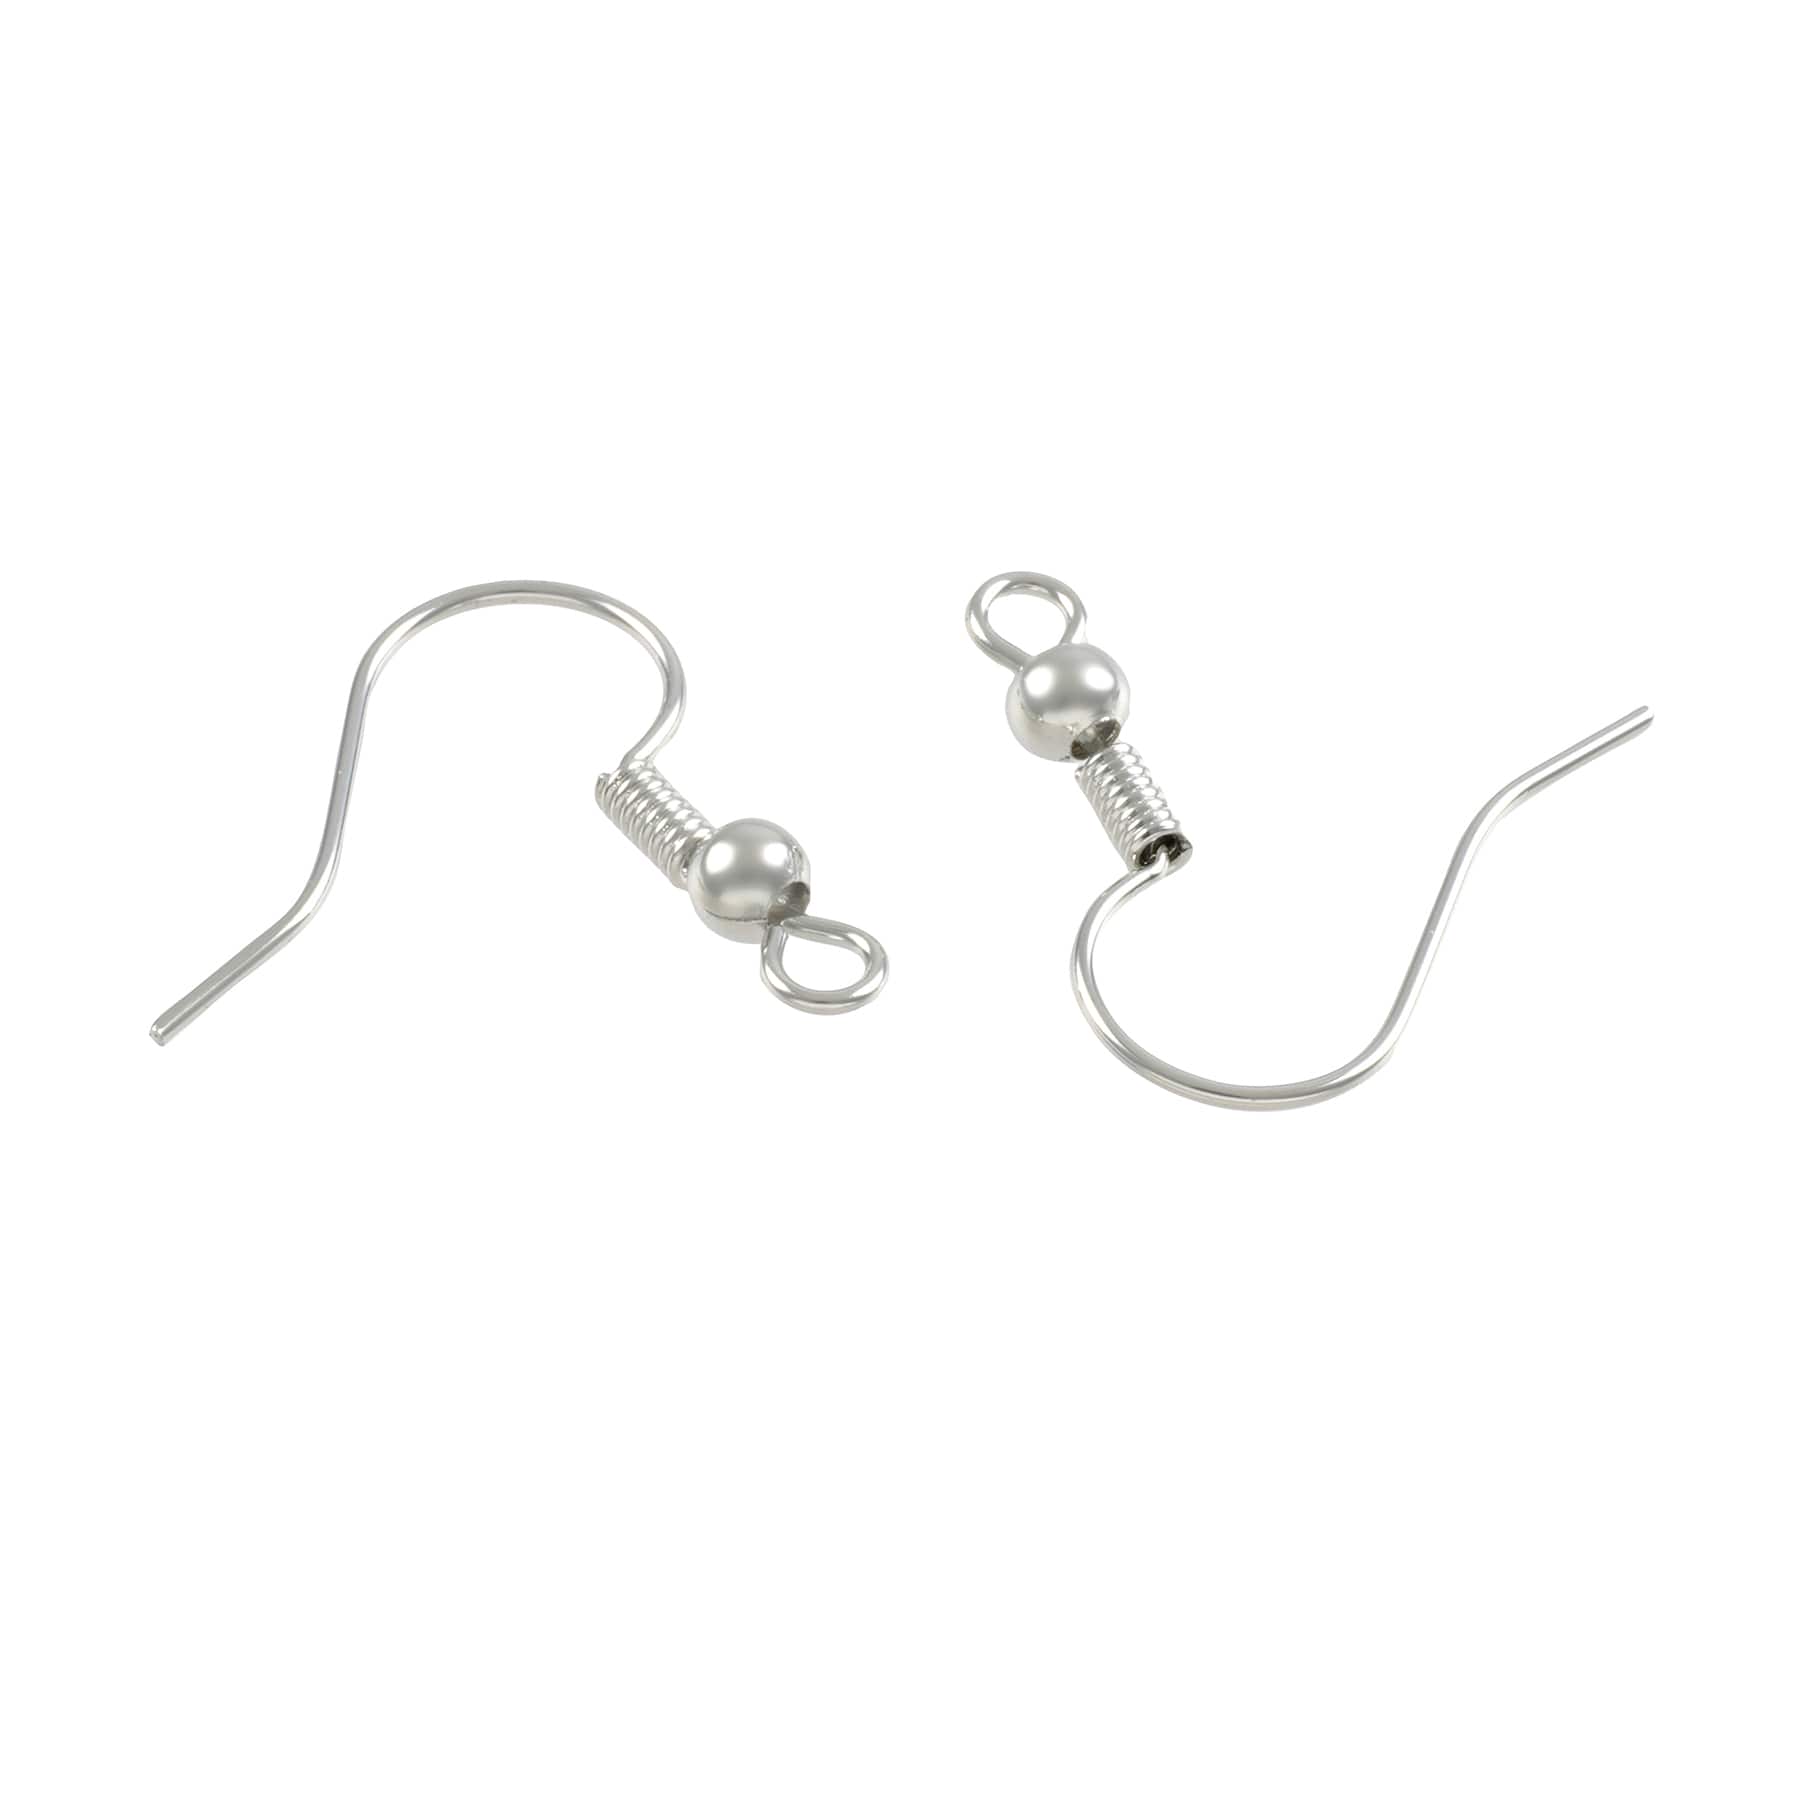 Earring Safety Backs for Fish Hook Earrings Small (144)